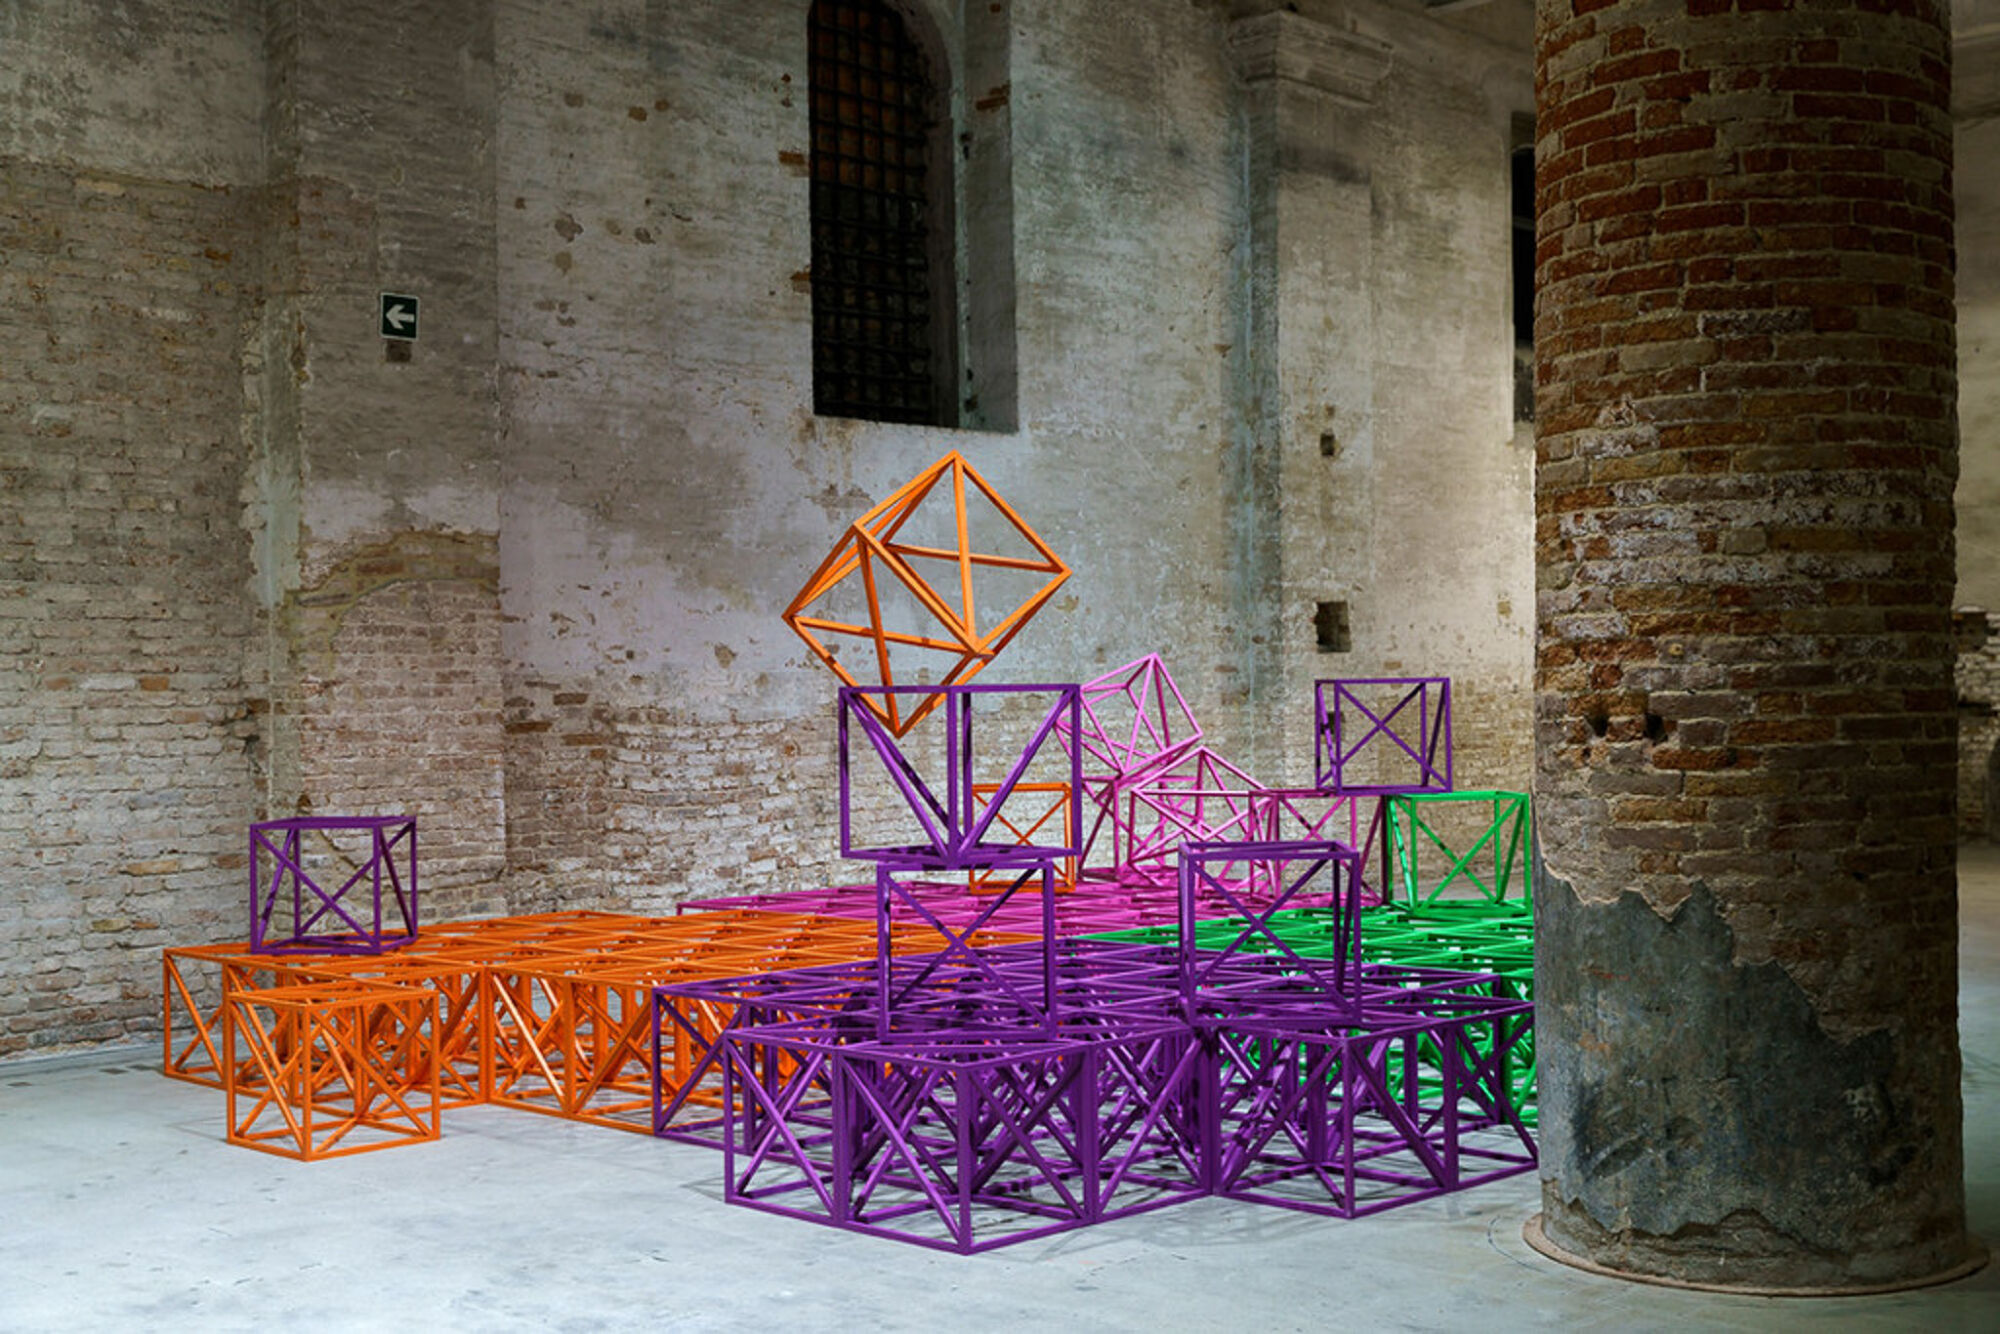 The Wick - Rasheed Araeen
Zero to Infinity in Venice, 2016-17, installation view, Arsenale, 57th Venice Biennale. 
Courtesy La Biennale di Venezia, Rasheed Araeen and Grosvenor Gallery. Photograph Italo Rondinella.
